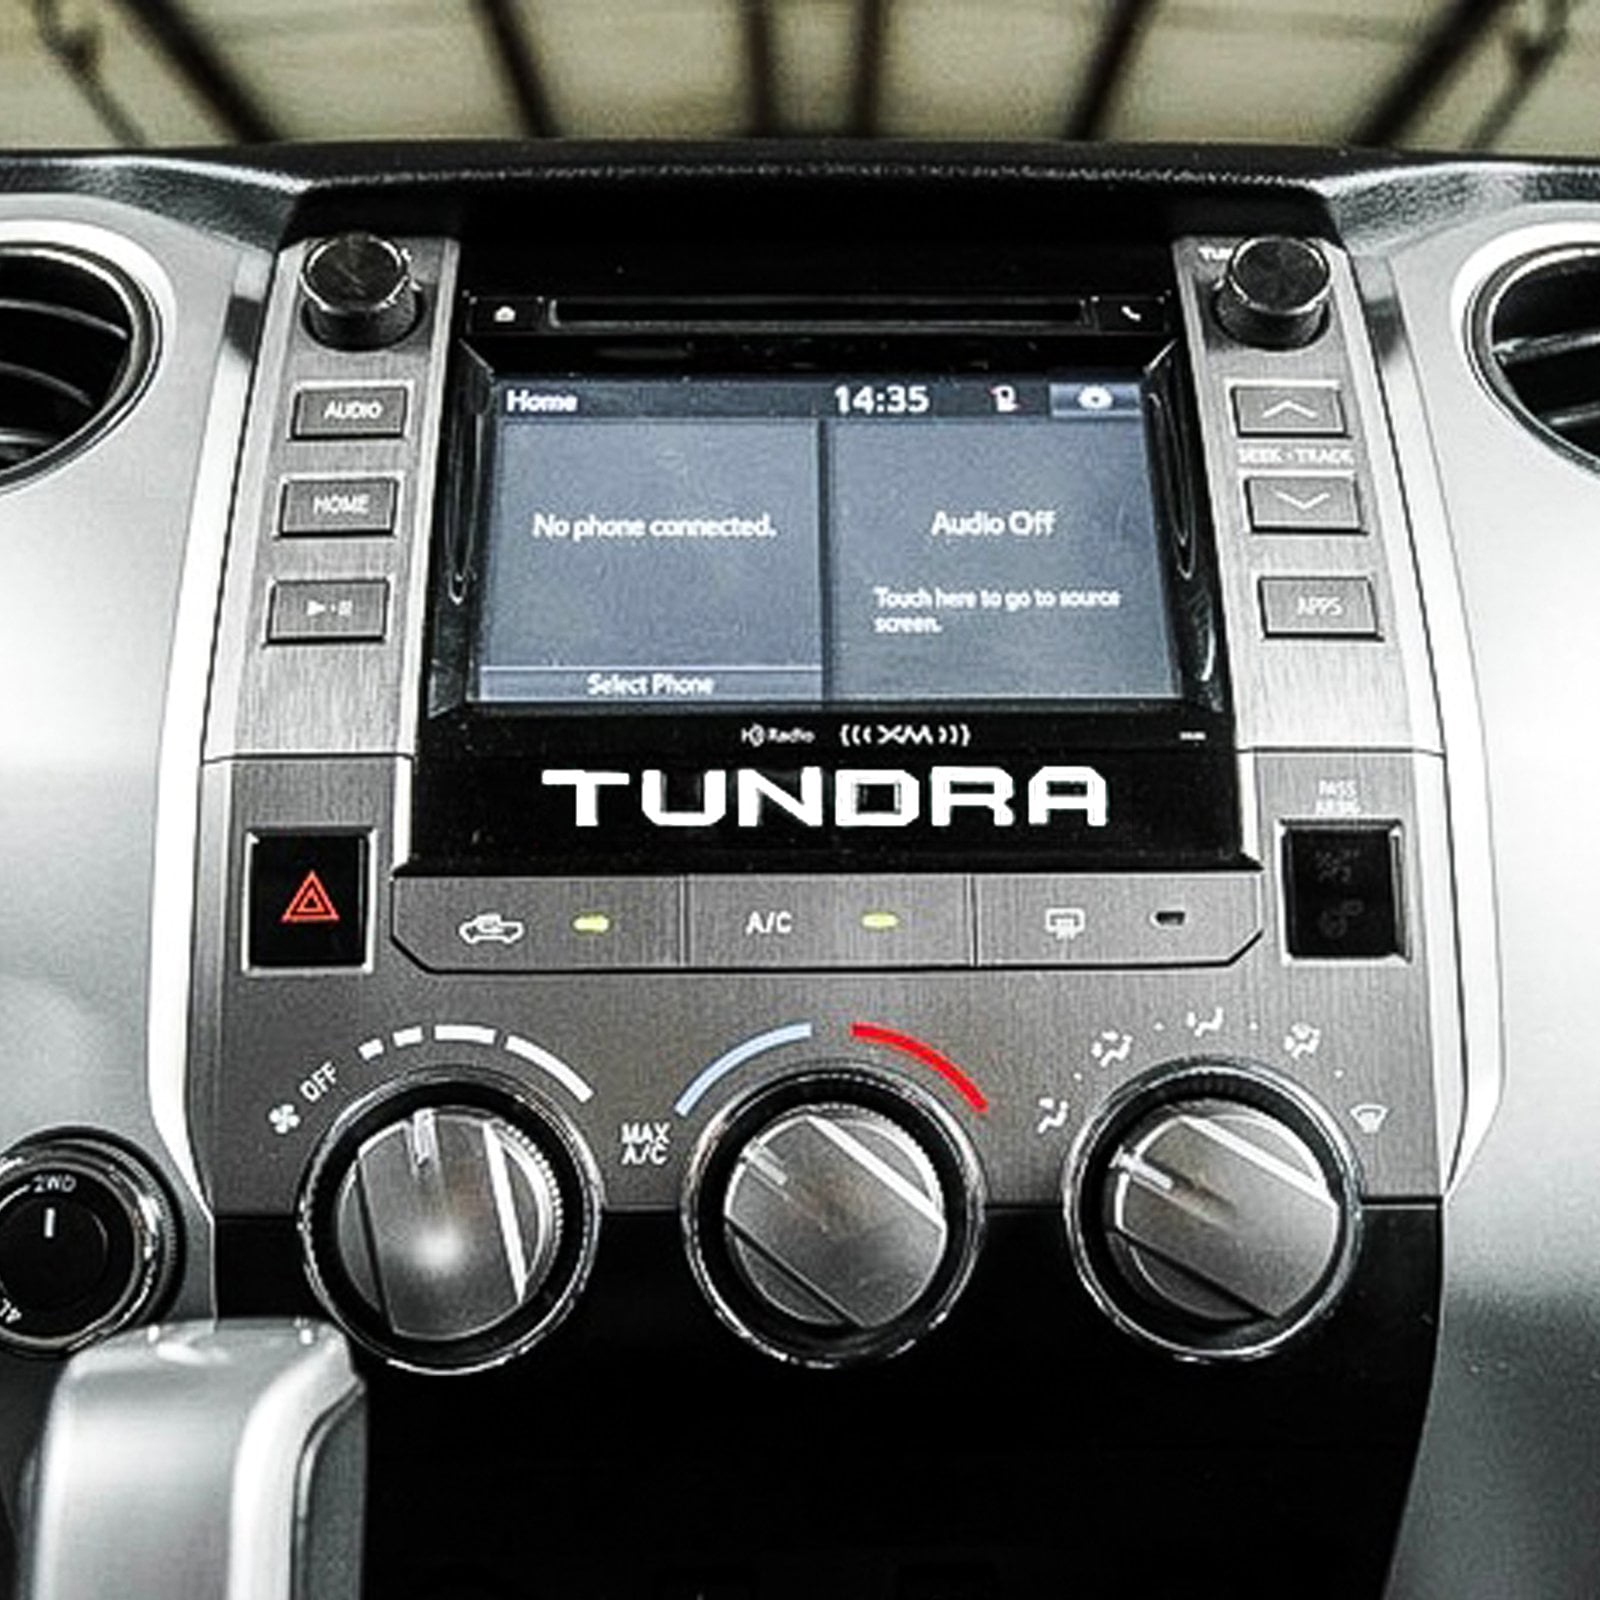 Radio Dashboard Insert Letter Vinyl Decal Sticker Fit Toyota Tundra 2014-19 Red